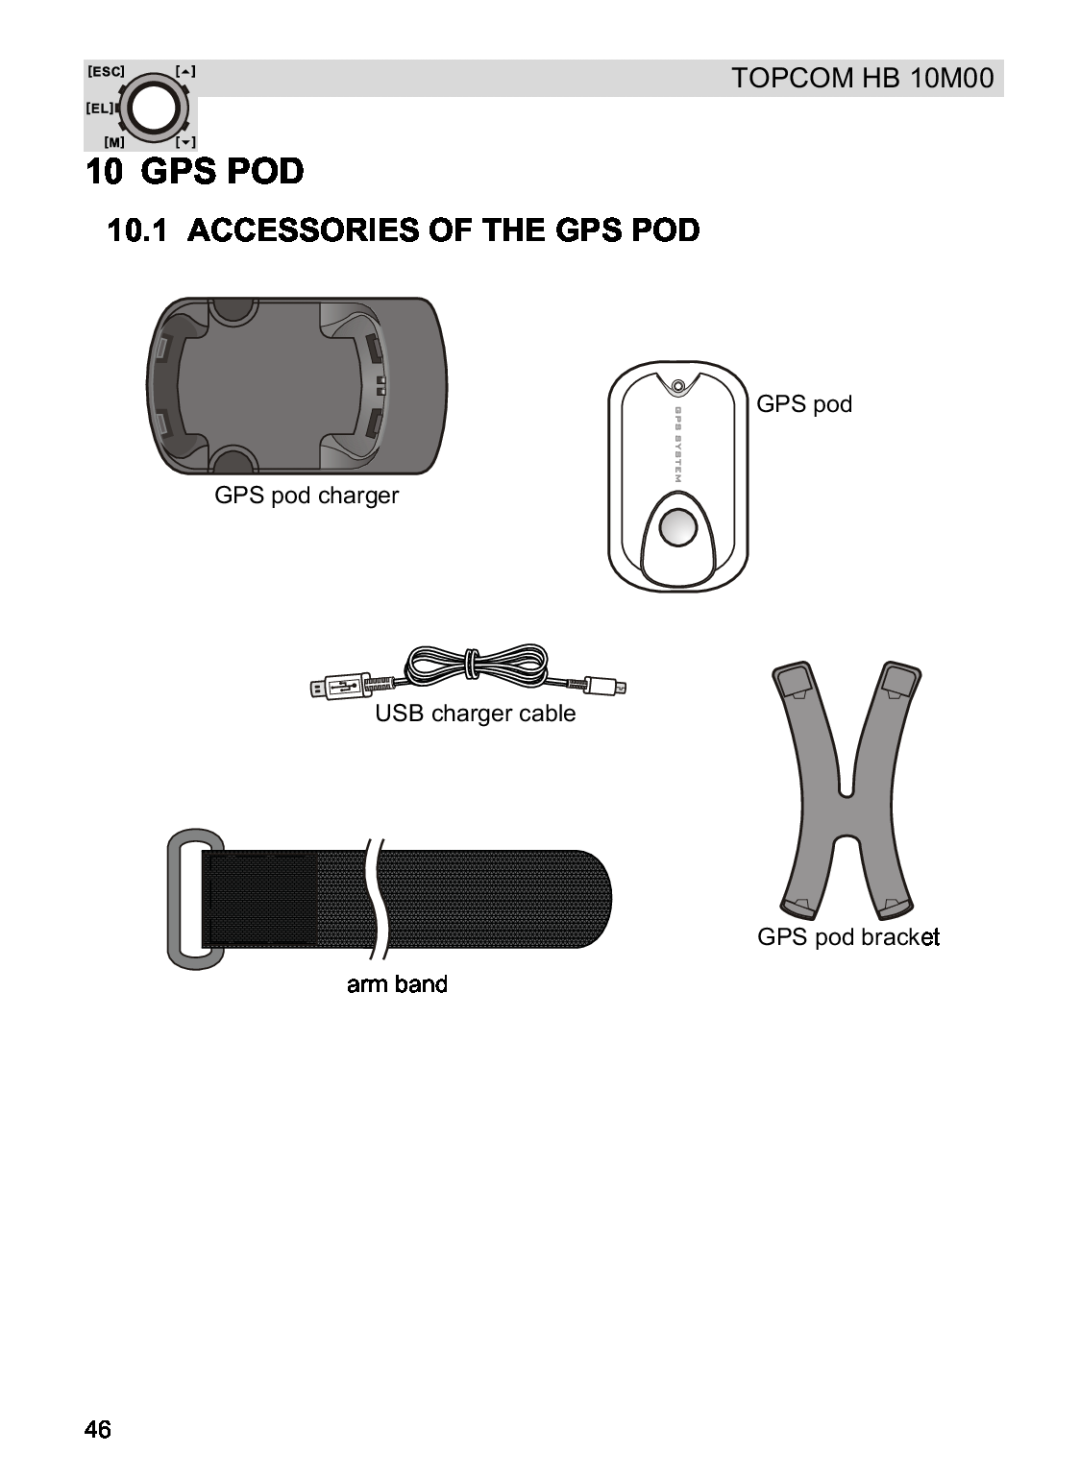 Topcom HB 10M00 manual Accessories Of The Gps Pod 